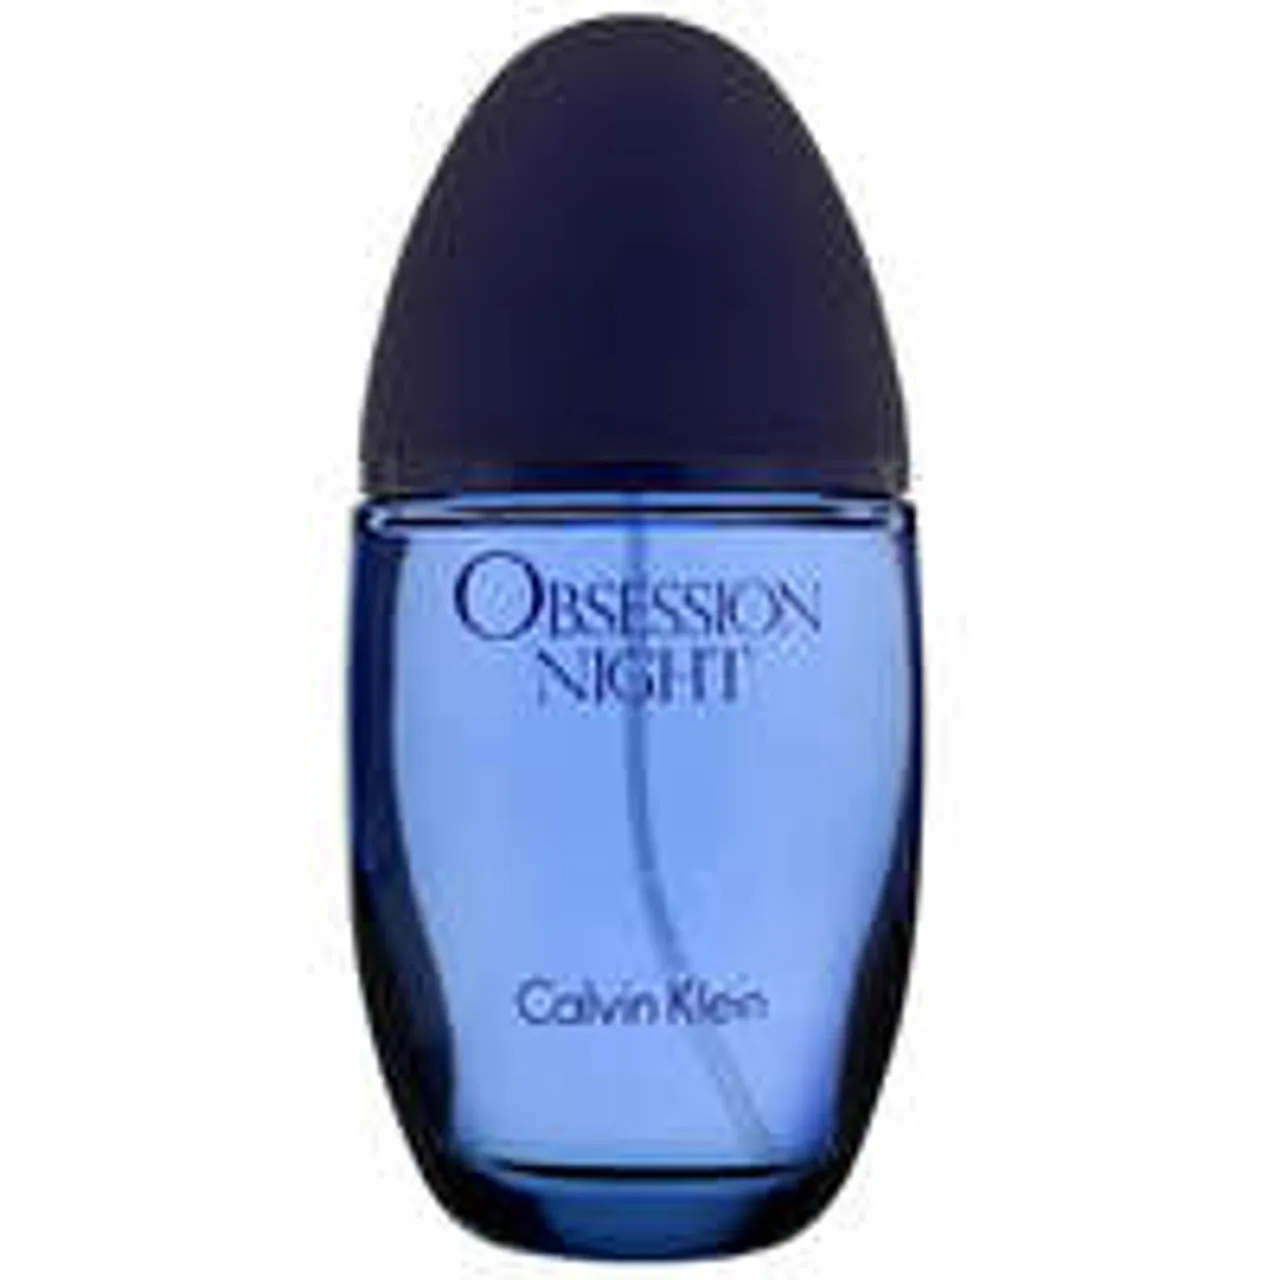 Calvin Klein Obsession Night For Women Eau de Parfum 100ml